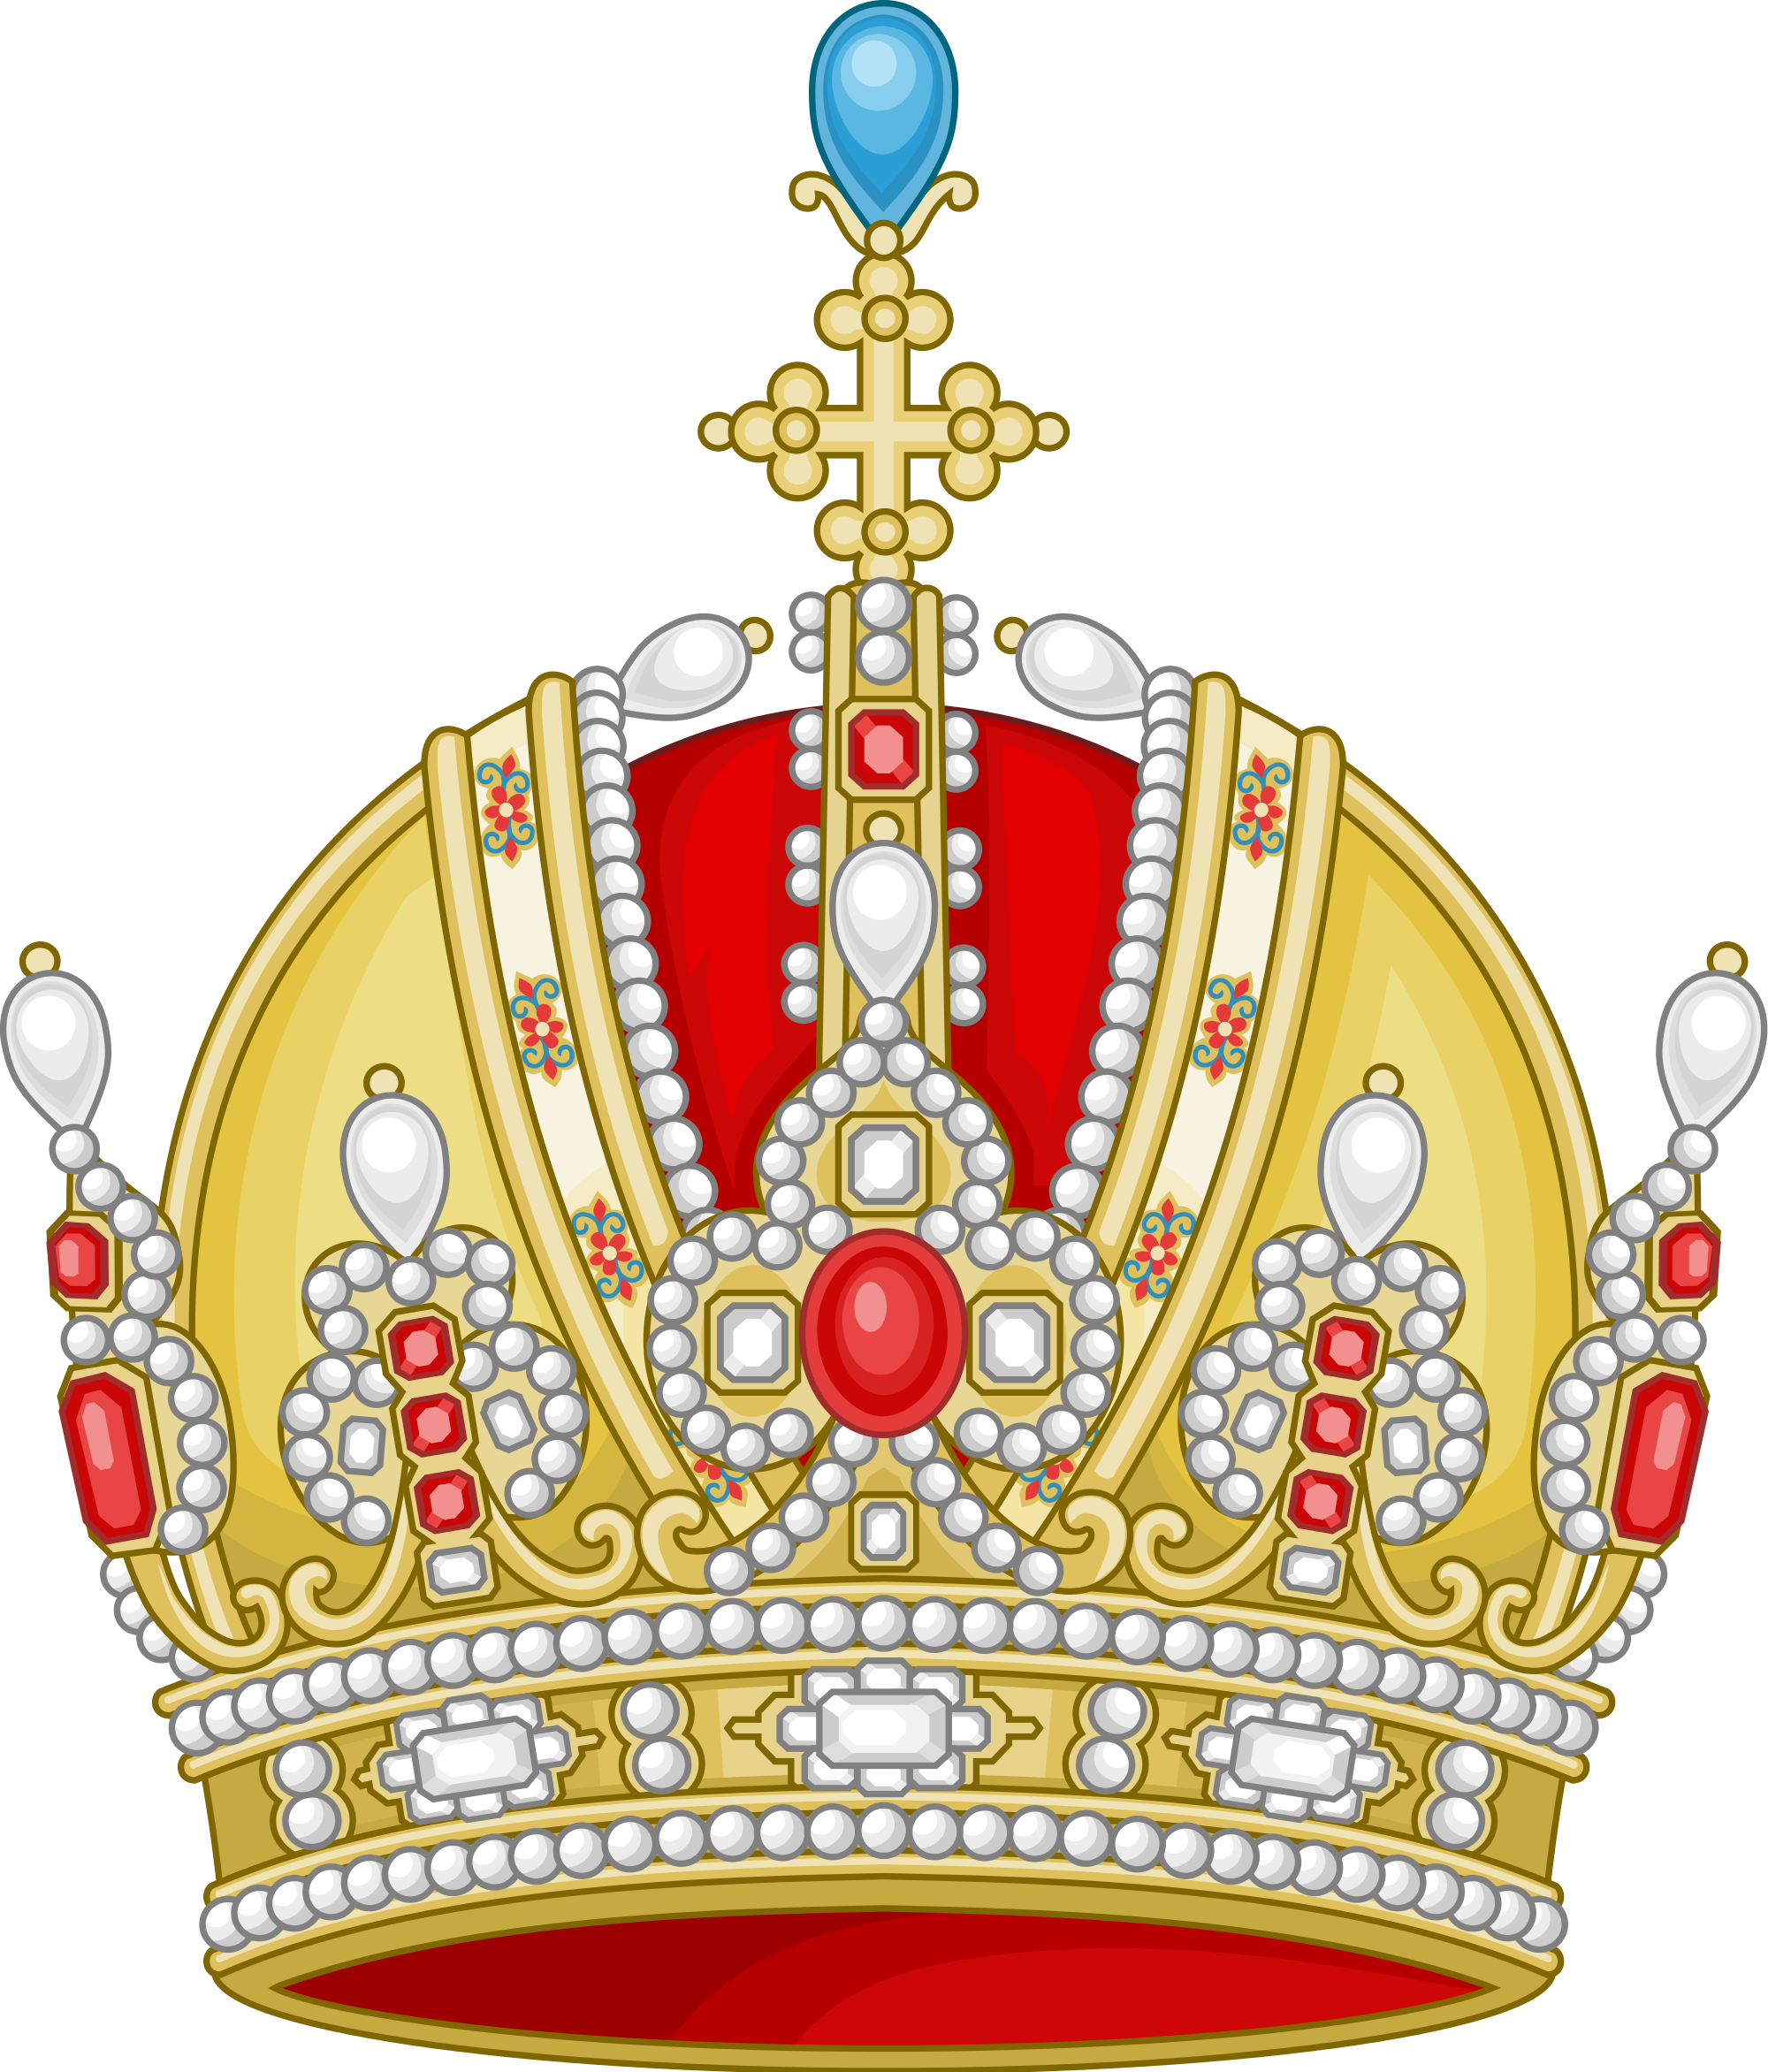 Imperial Crown Of Austria - Heraldic Imperial Crown (2000x2344)